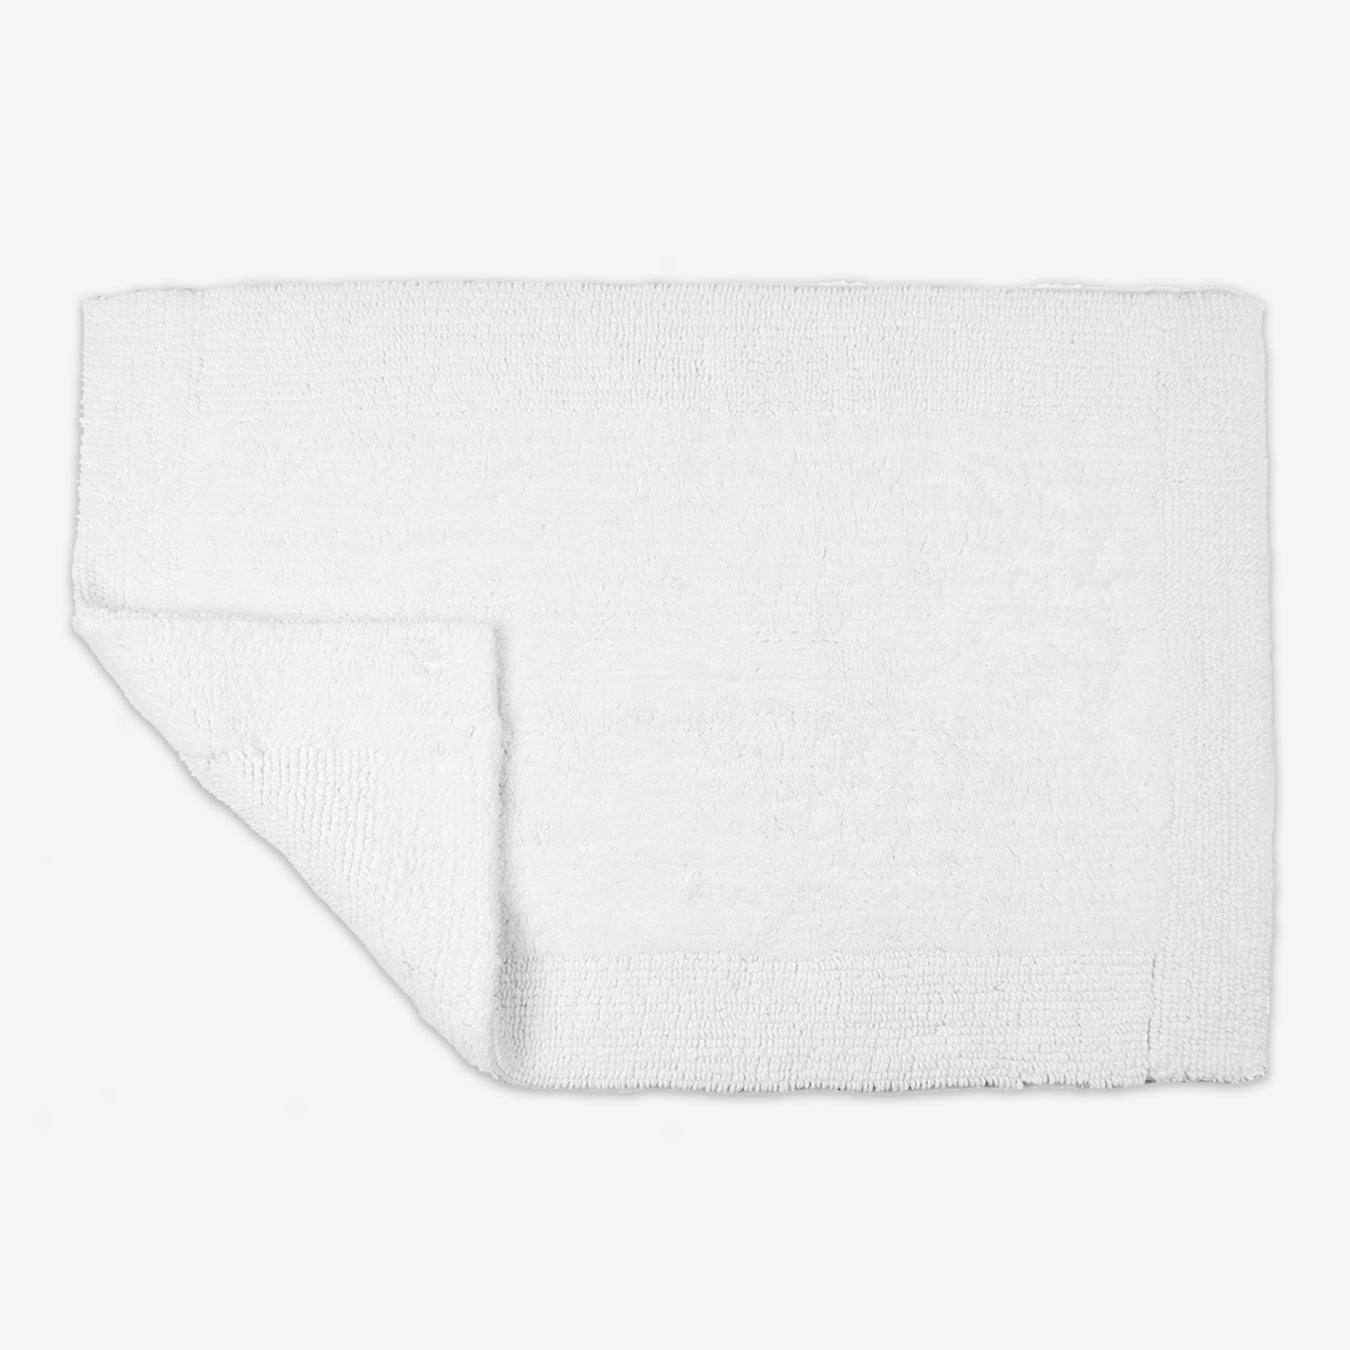 White Reversible Cotton Large Bath Mat - Luxury Thick Bathmat